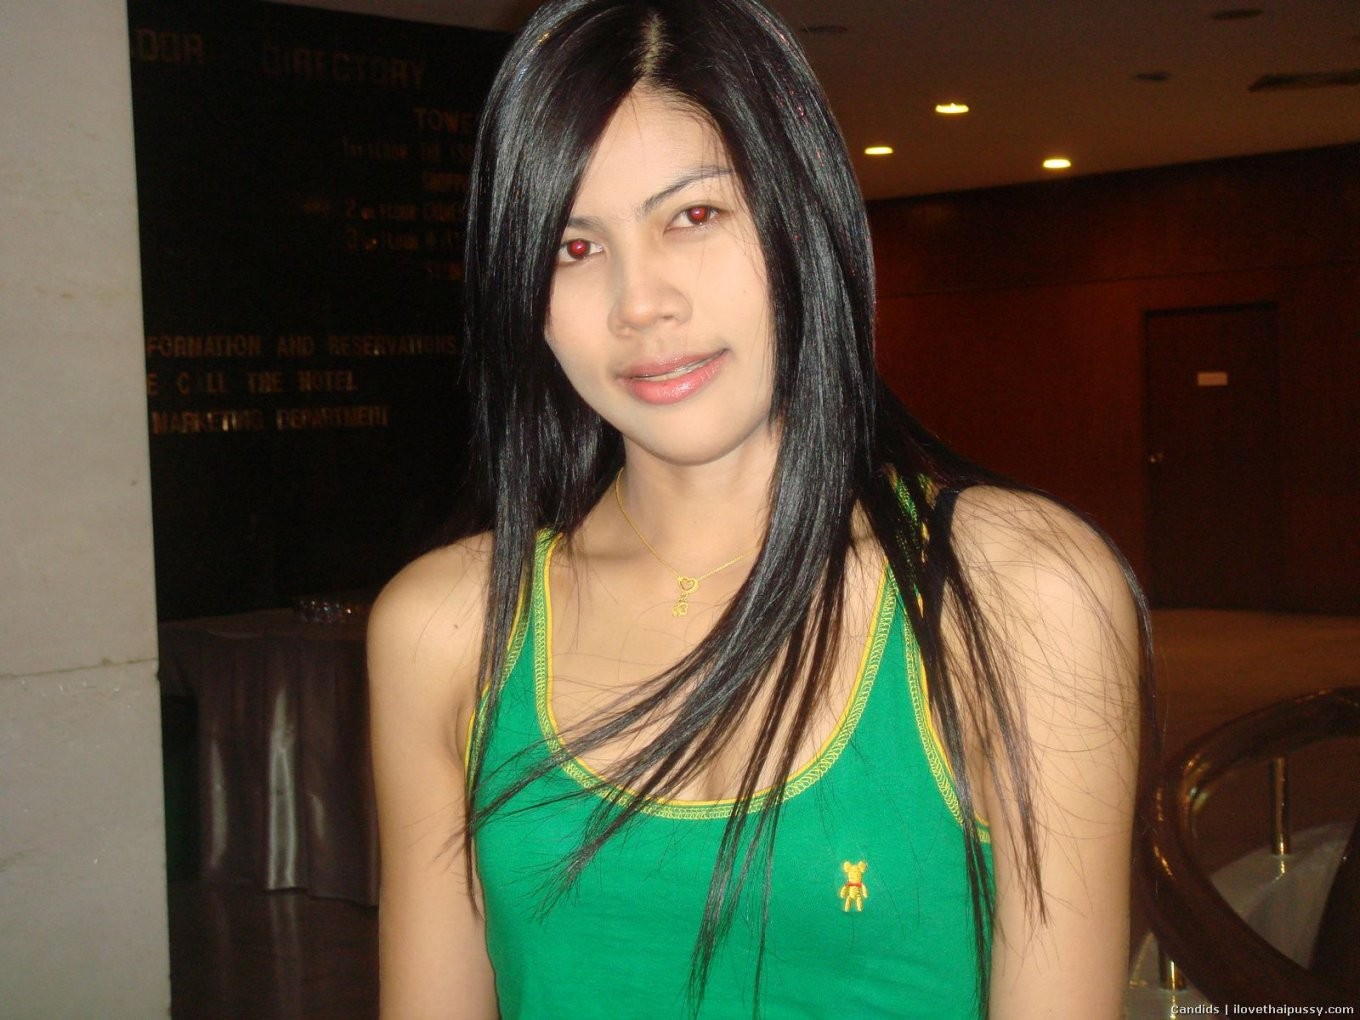 Calda prostituta thailandese teenager allarga il culo e viene penetrata senza preservativo bareback asian slut
 #67975131